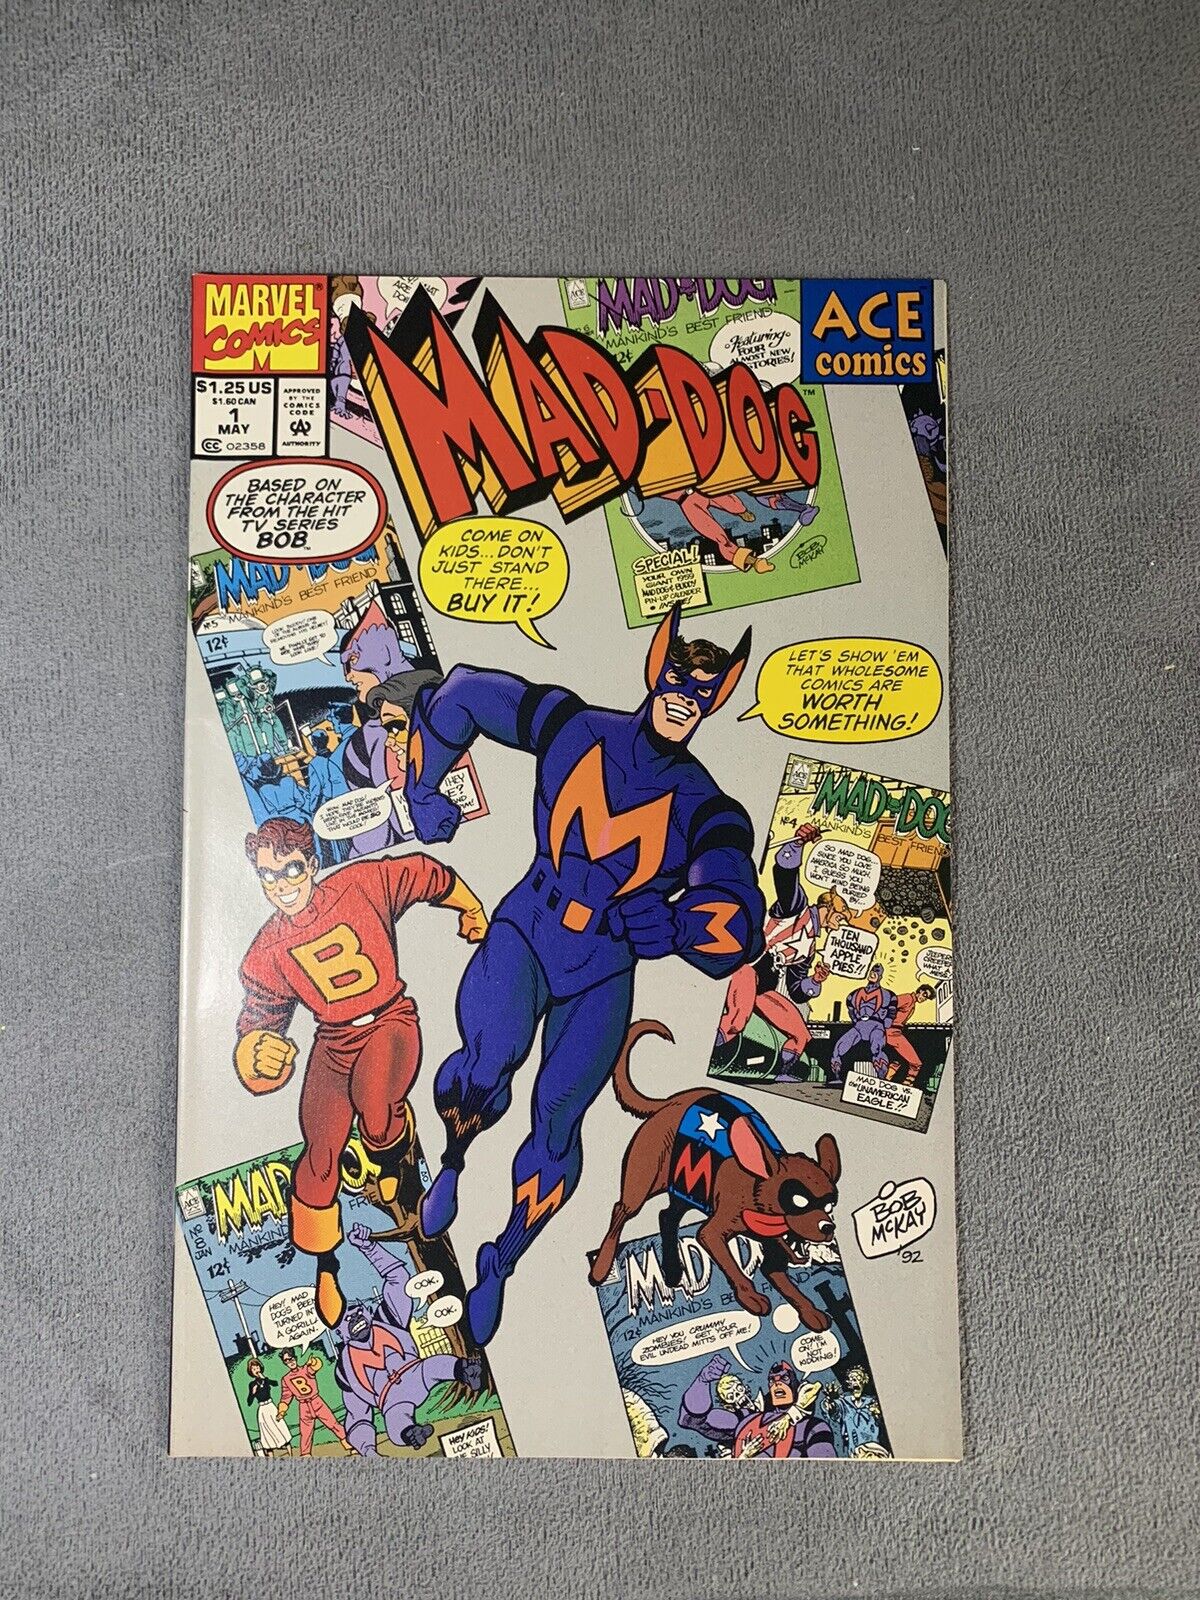 Mad-Dog 1 NM 1995 Marvel Comics (formerly Ace Comics)